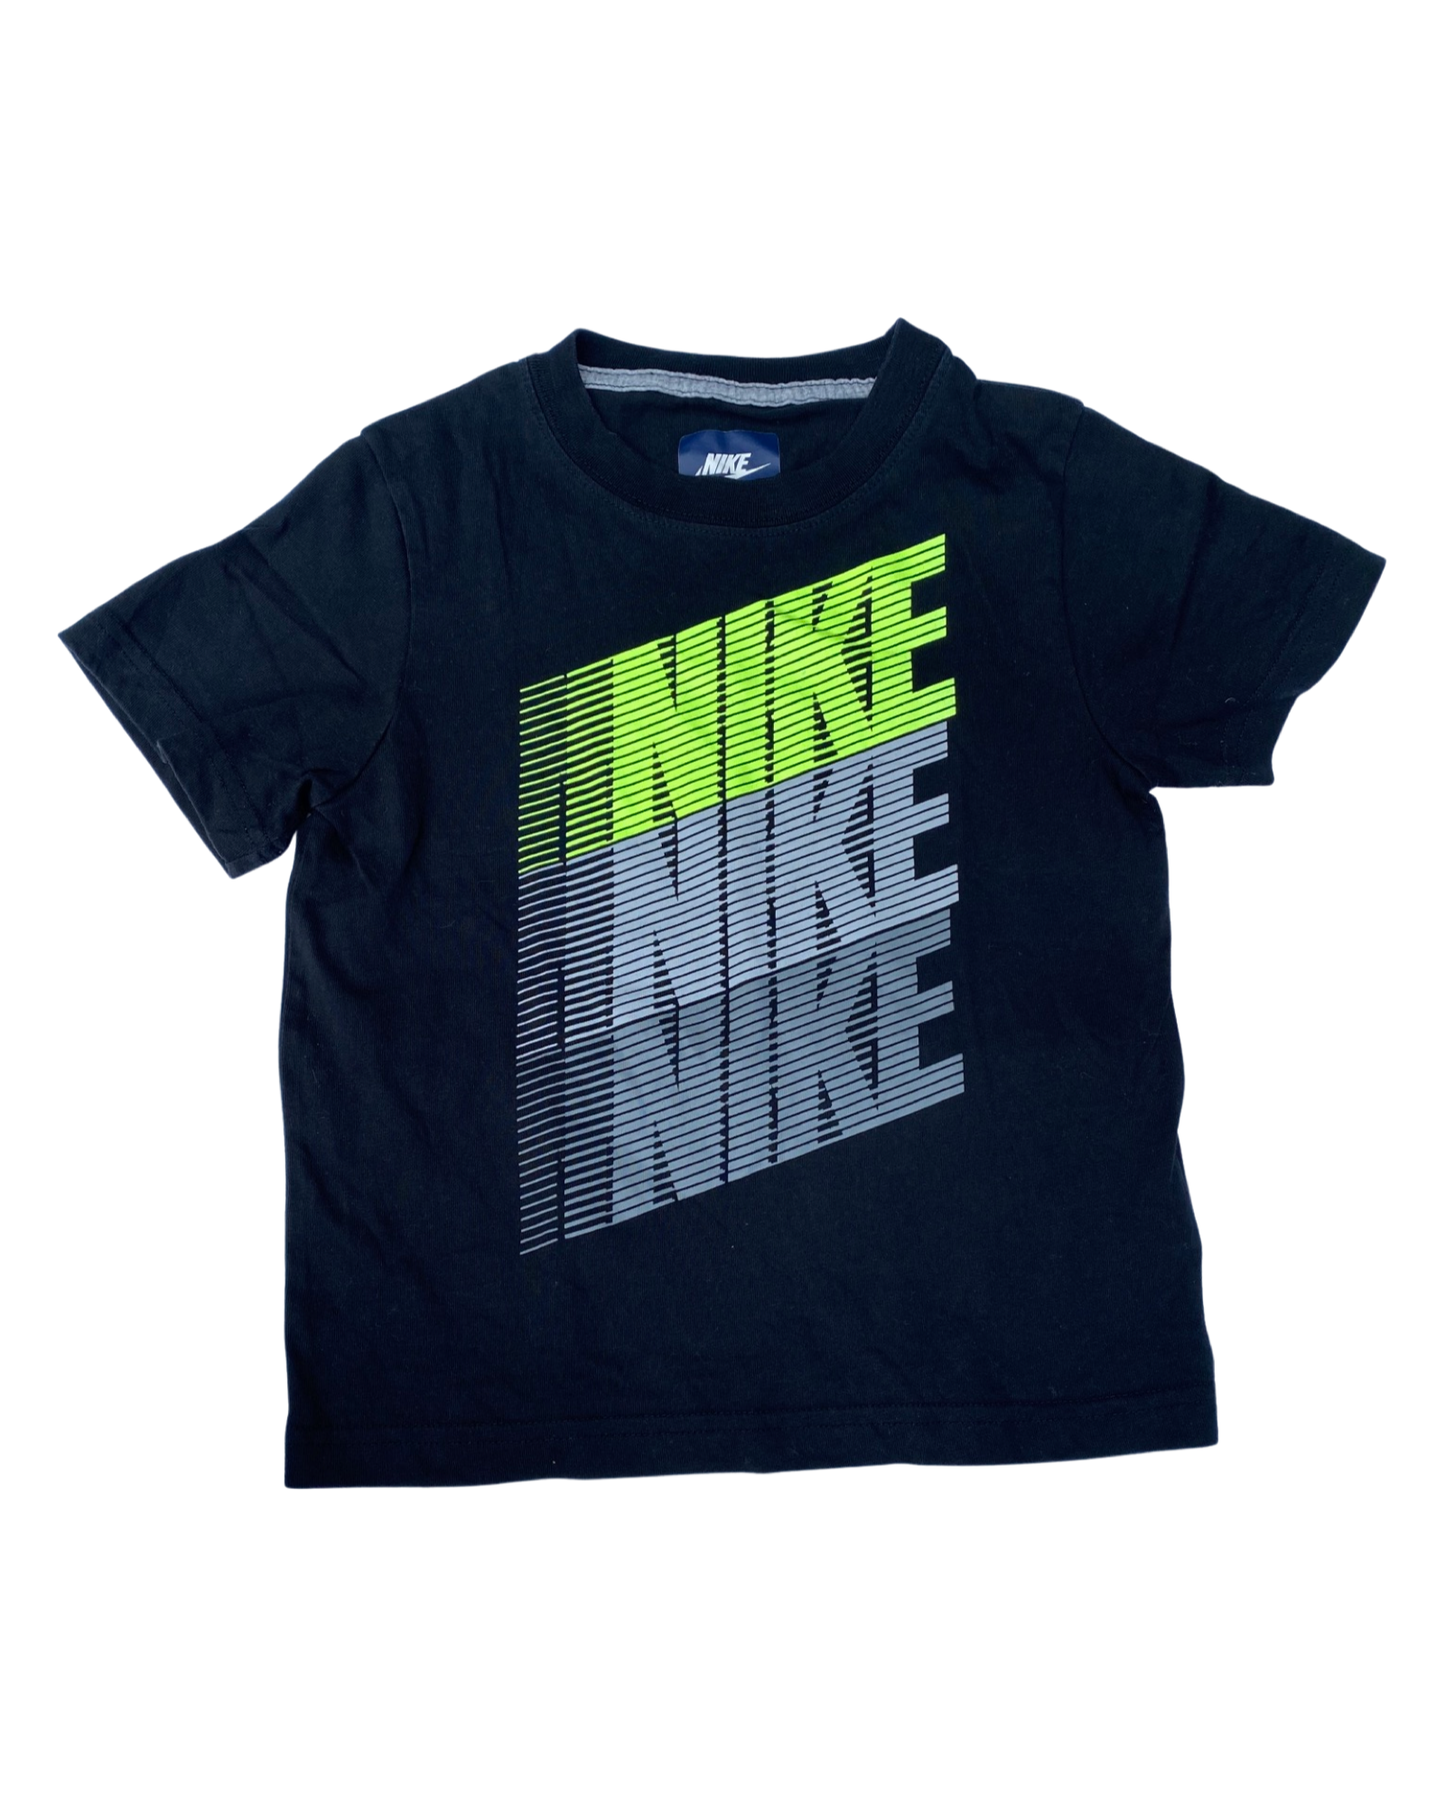 Nike black graphic logo print t shirt (size 4-5yrs)